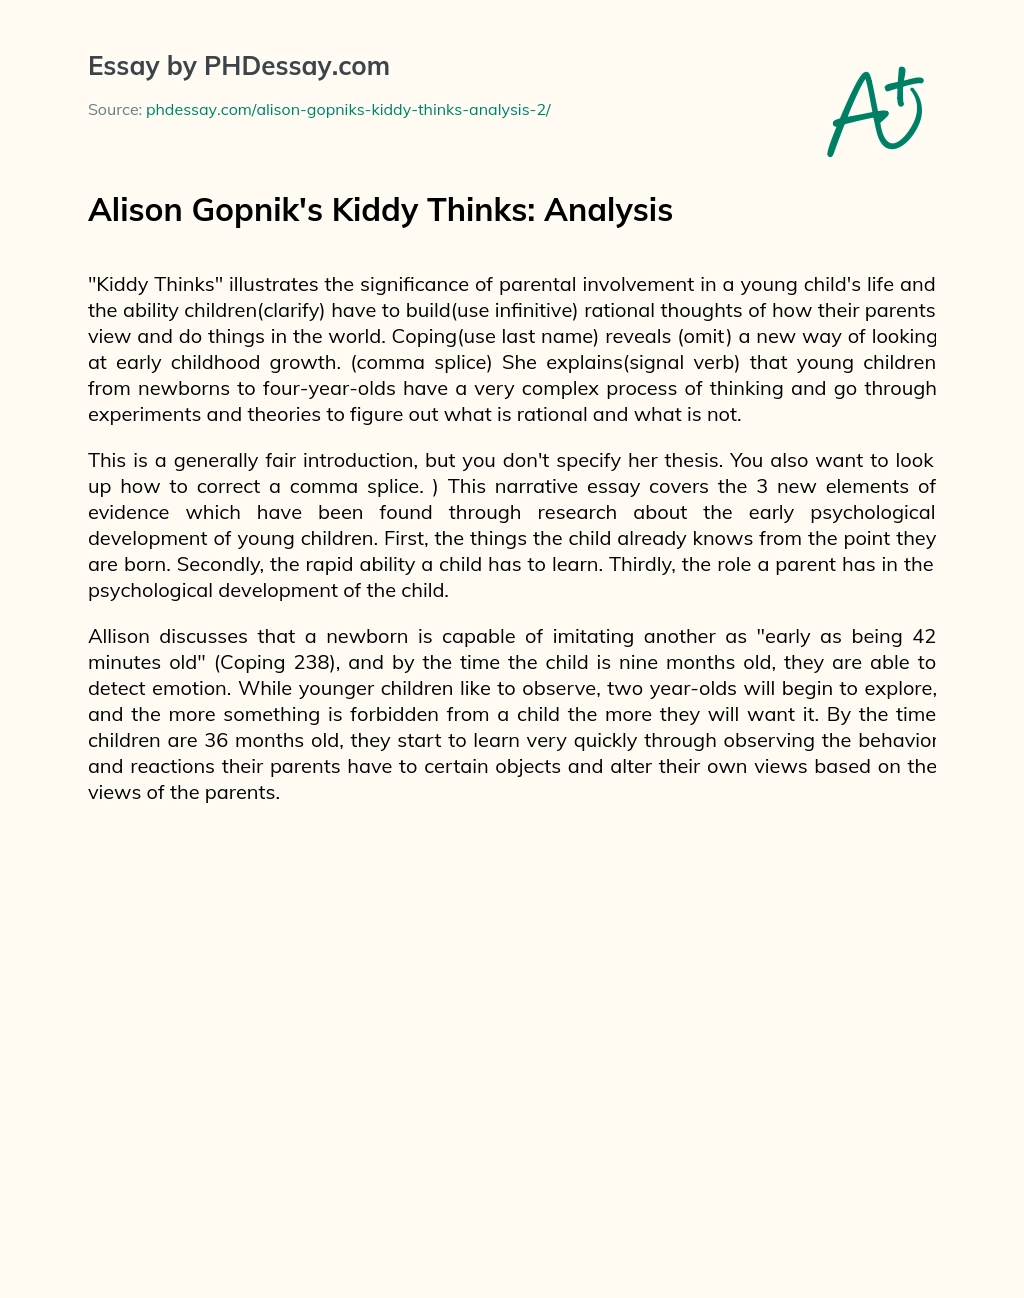 Alison Gopnik’s Kiddy Thinks: Analysis essay